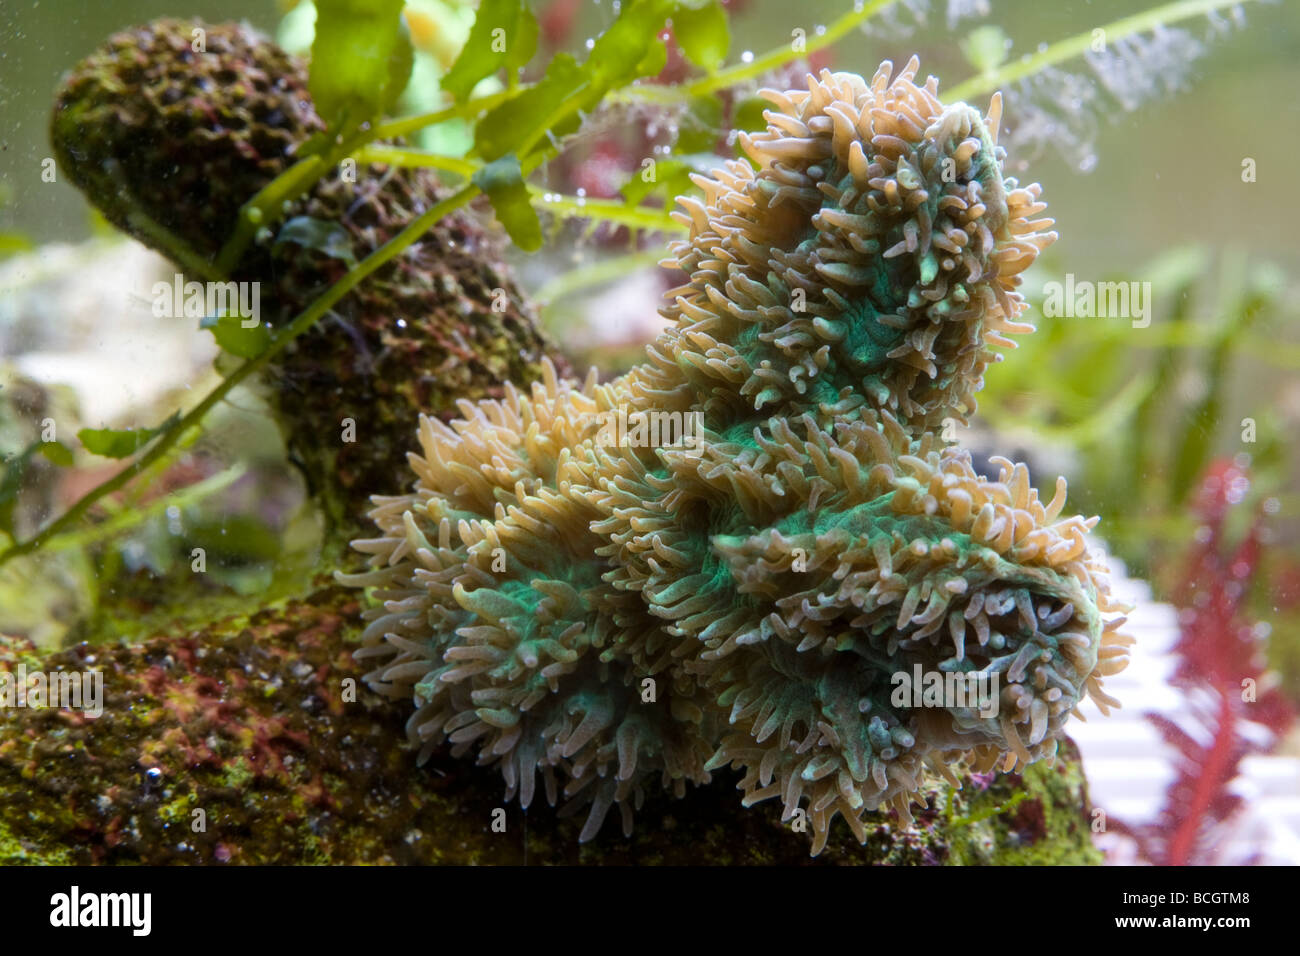 Fragment of Hydnophora exesa coral in aquarium Stock Photo